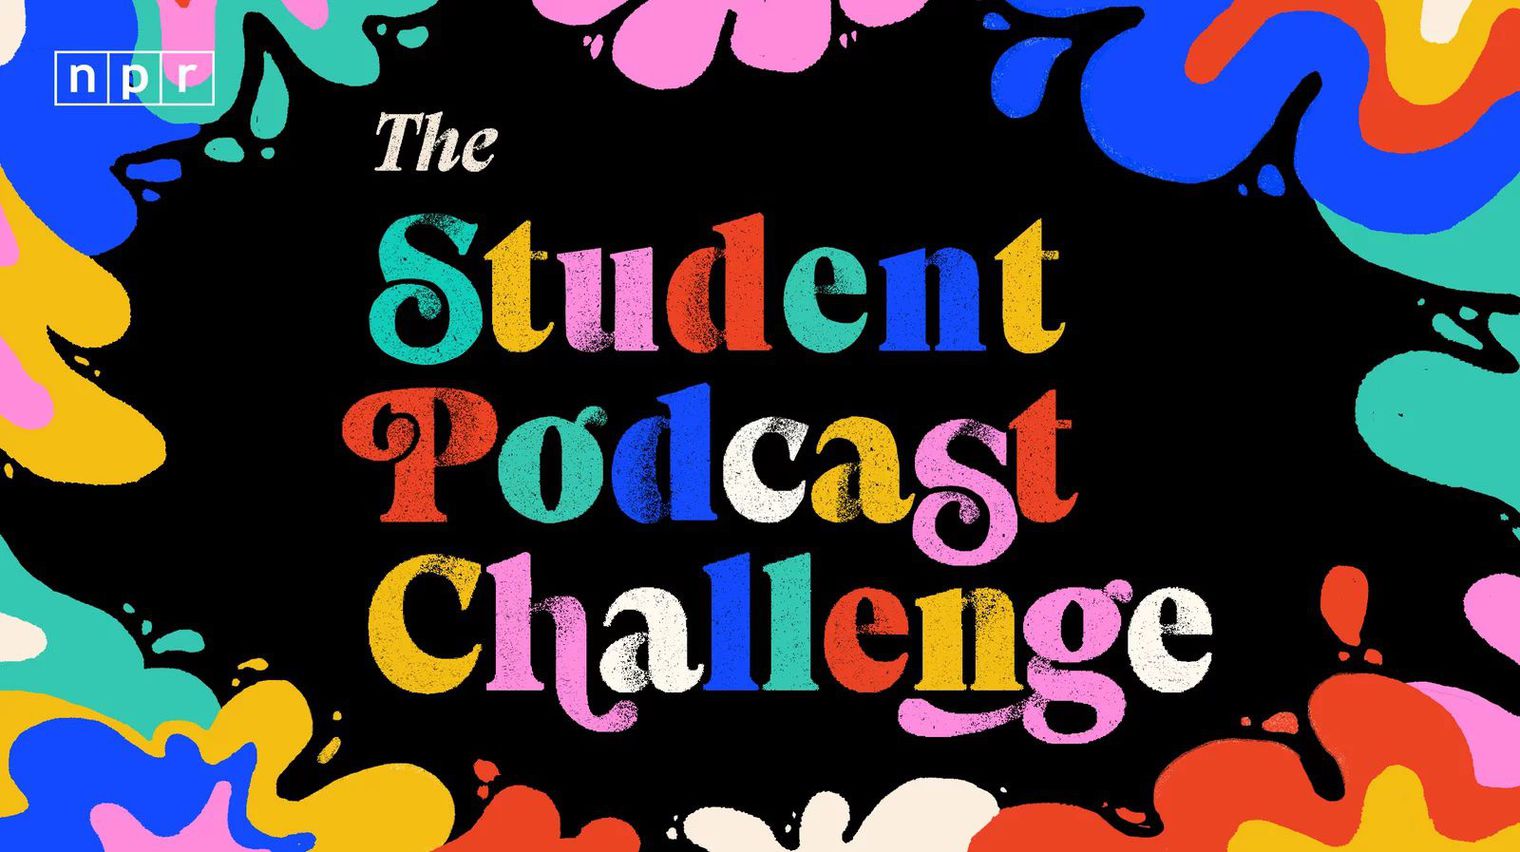 NPR podcast challenge logo